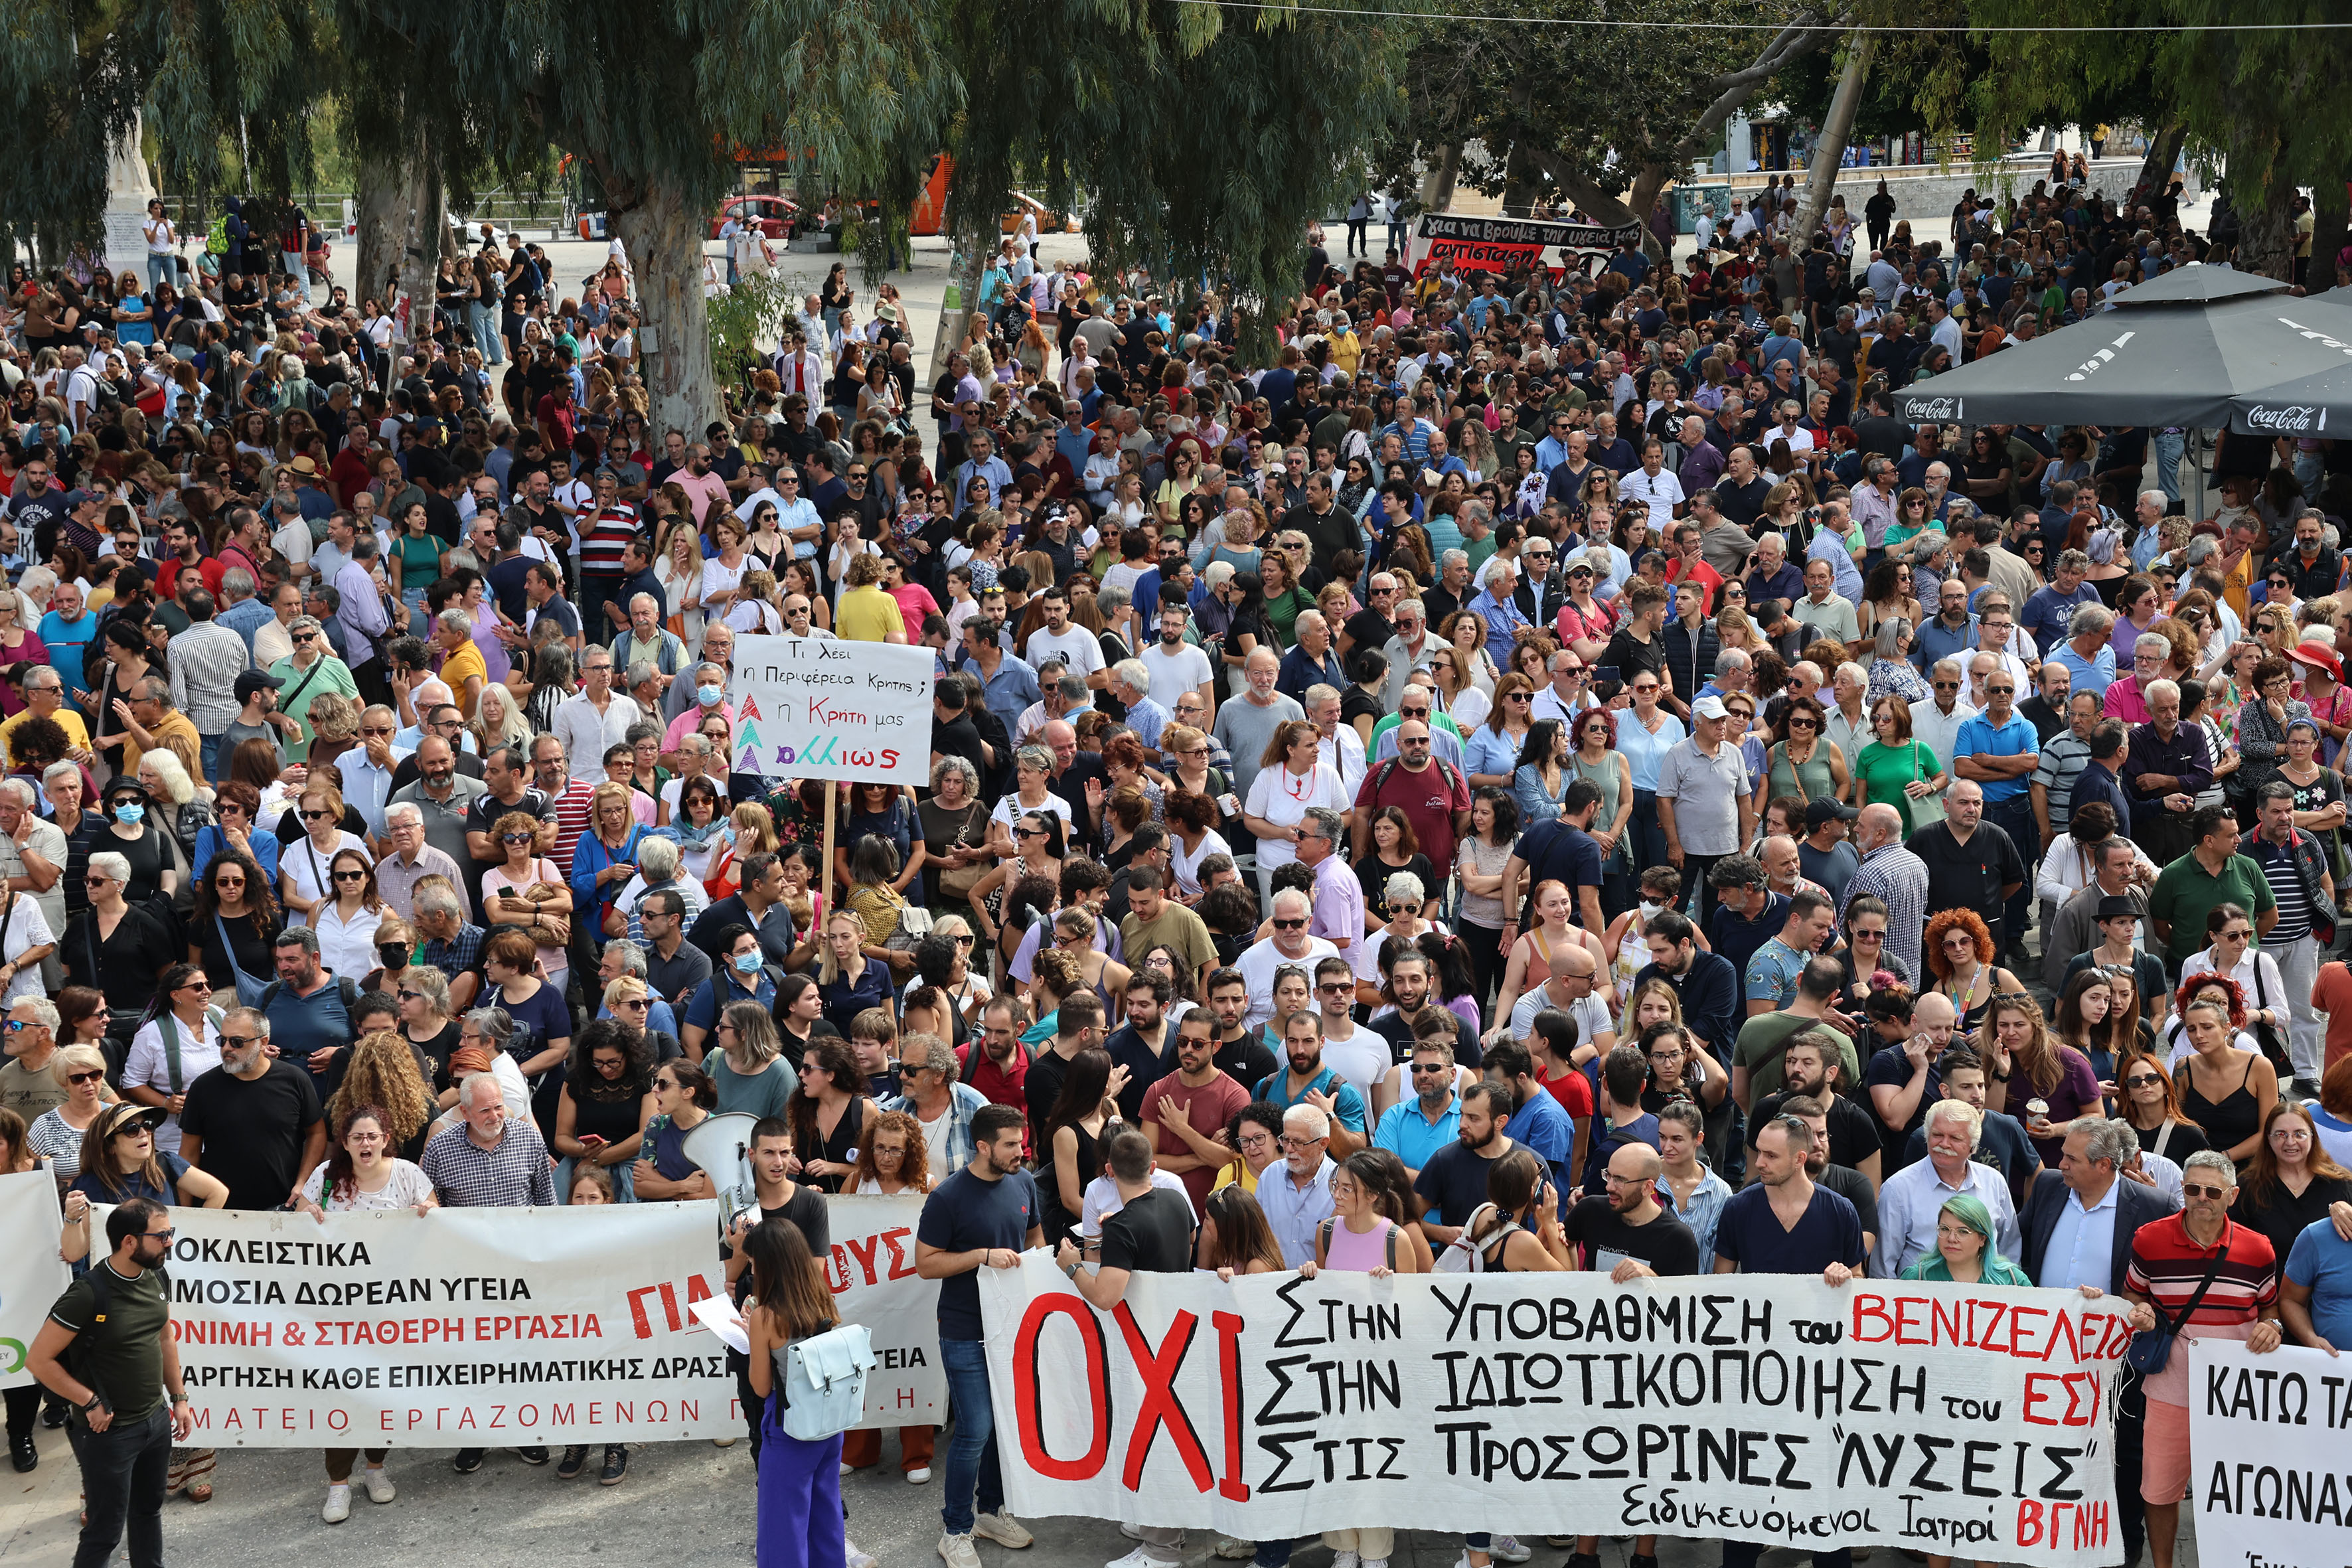 Heraklion: Amazing March to Save Venizeli Hospital (Photos)